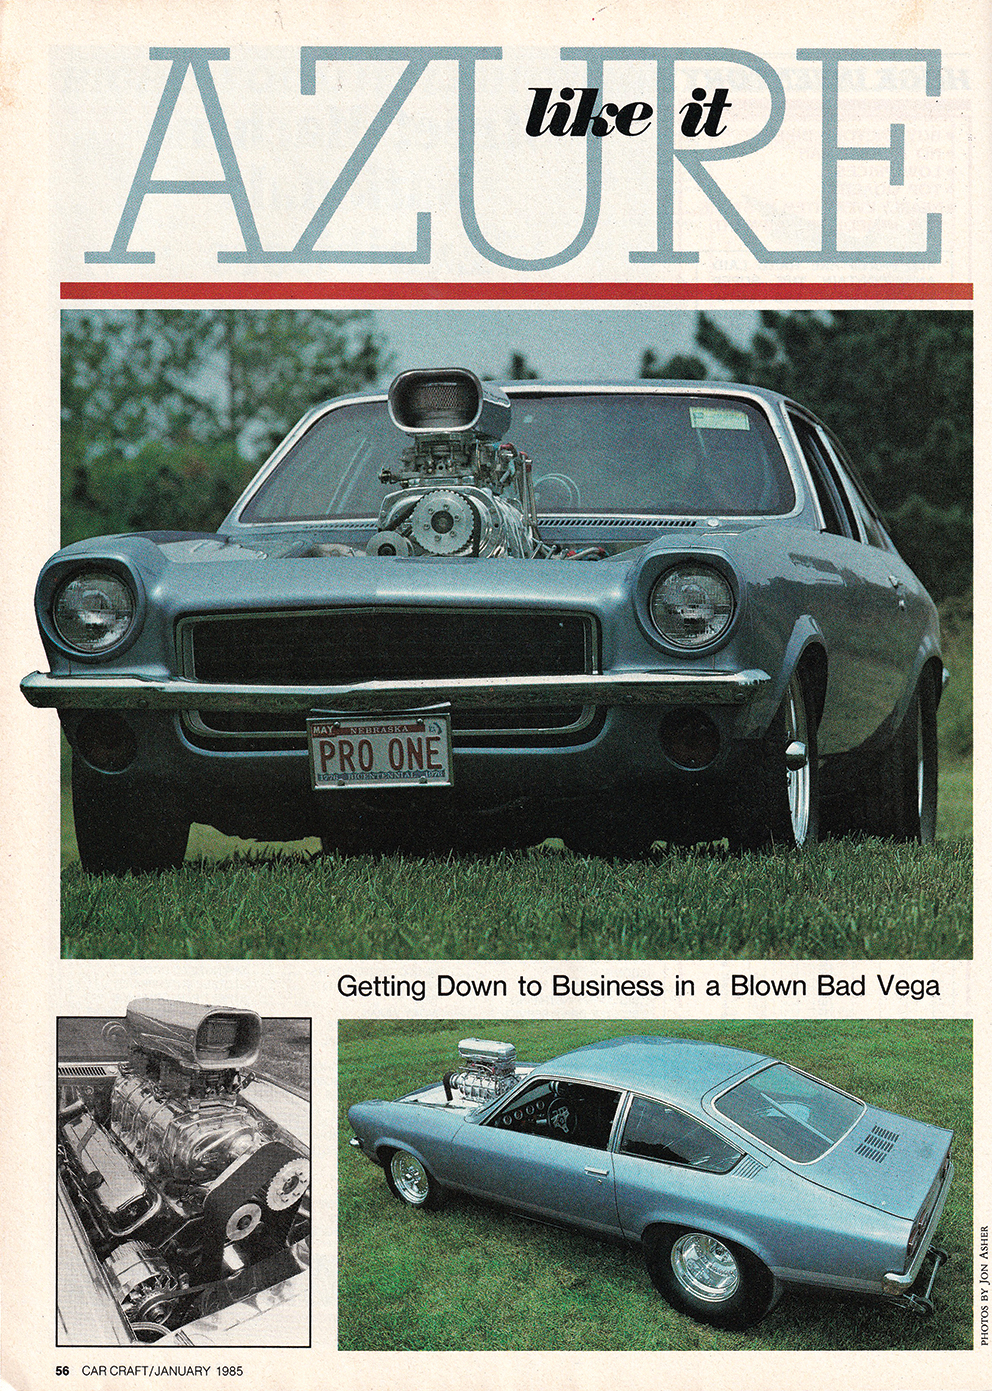 Blown '73 Vega on 1985 Car Craft magazine cover